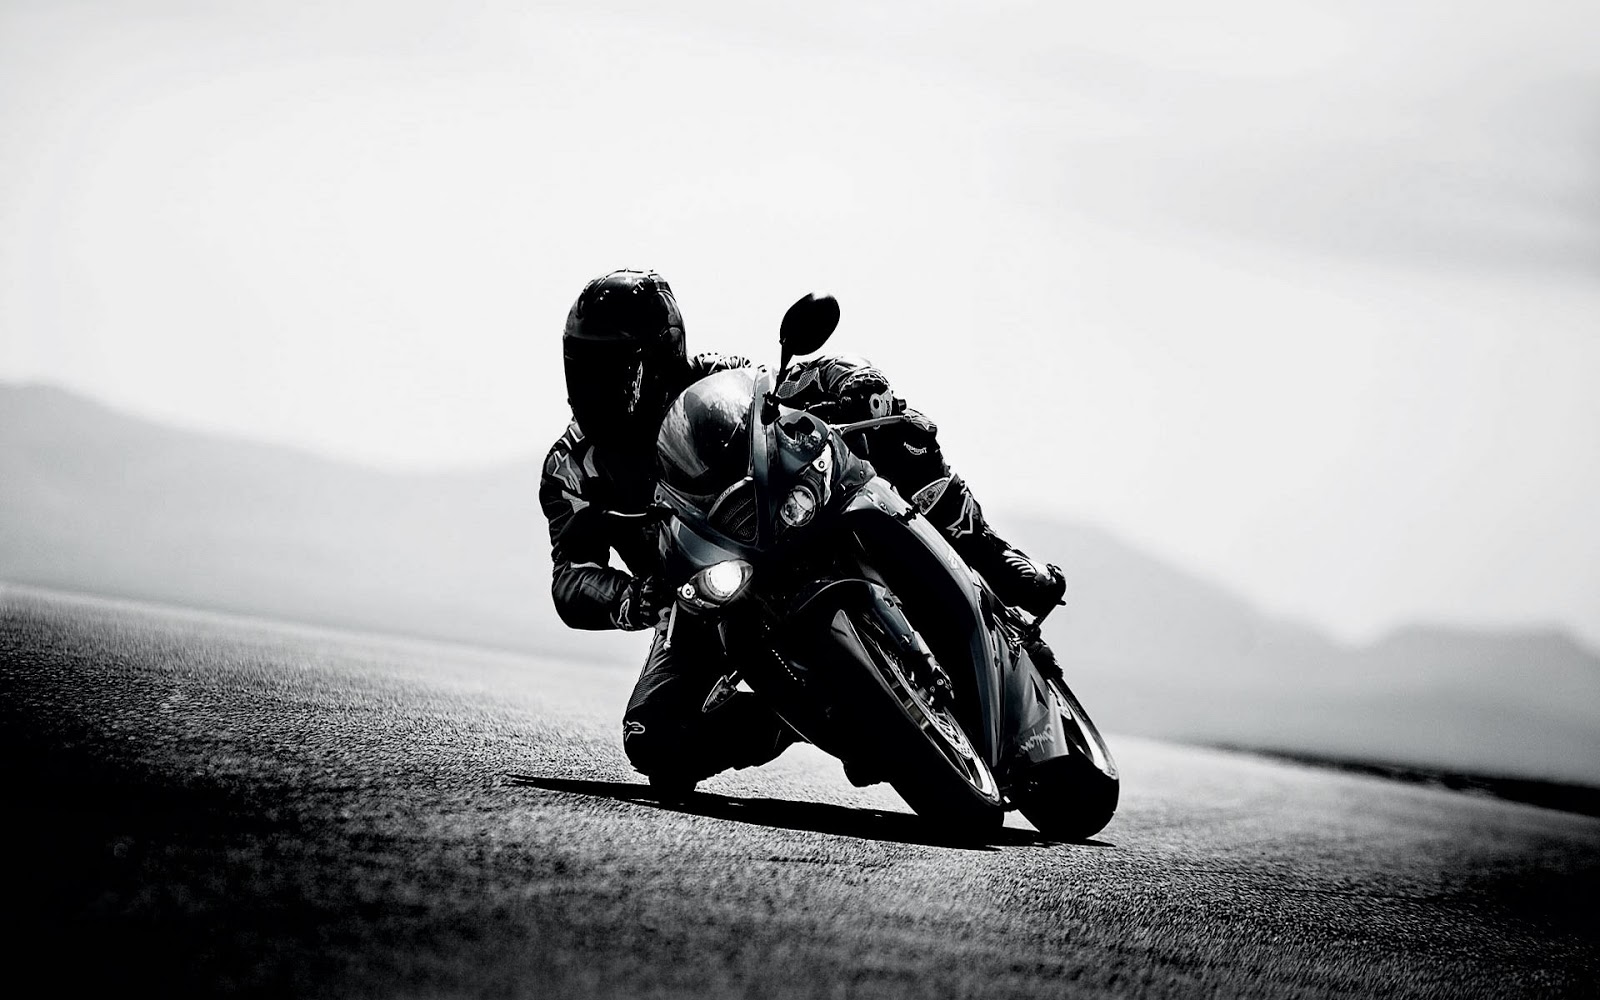 motorsiklet resimleri rooteto16